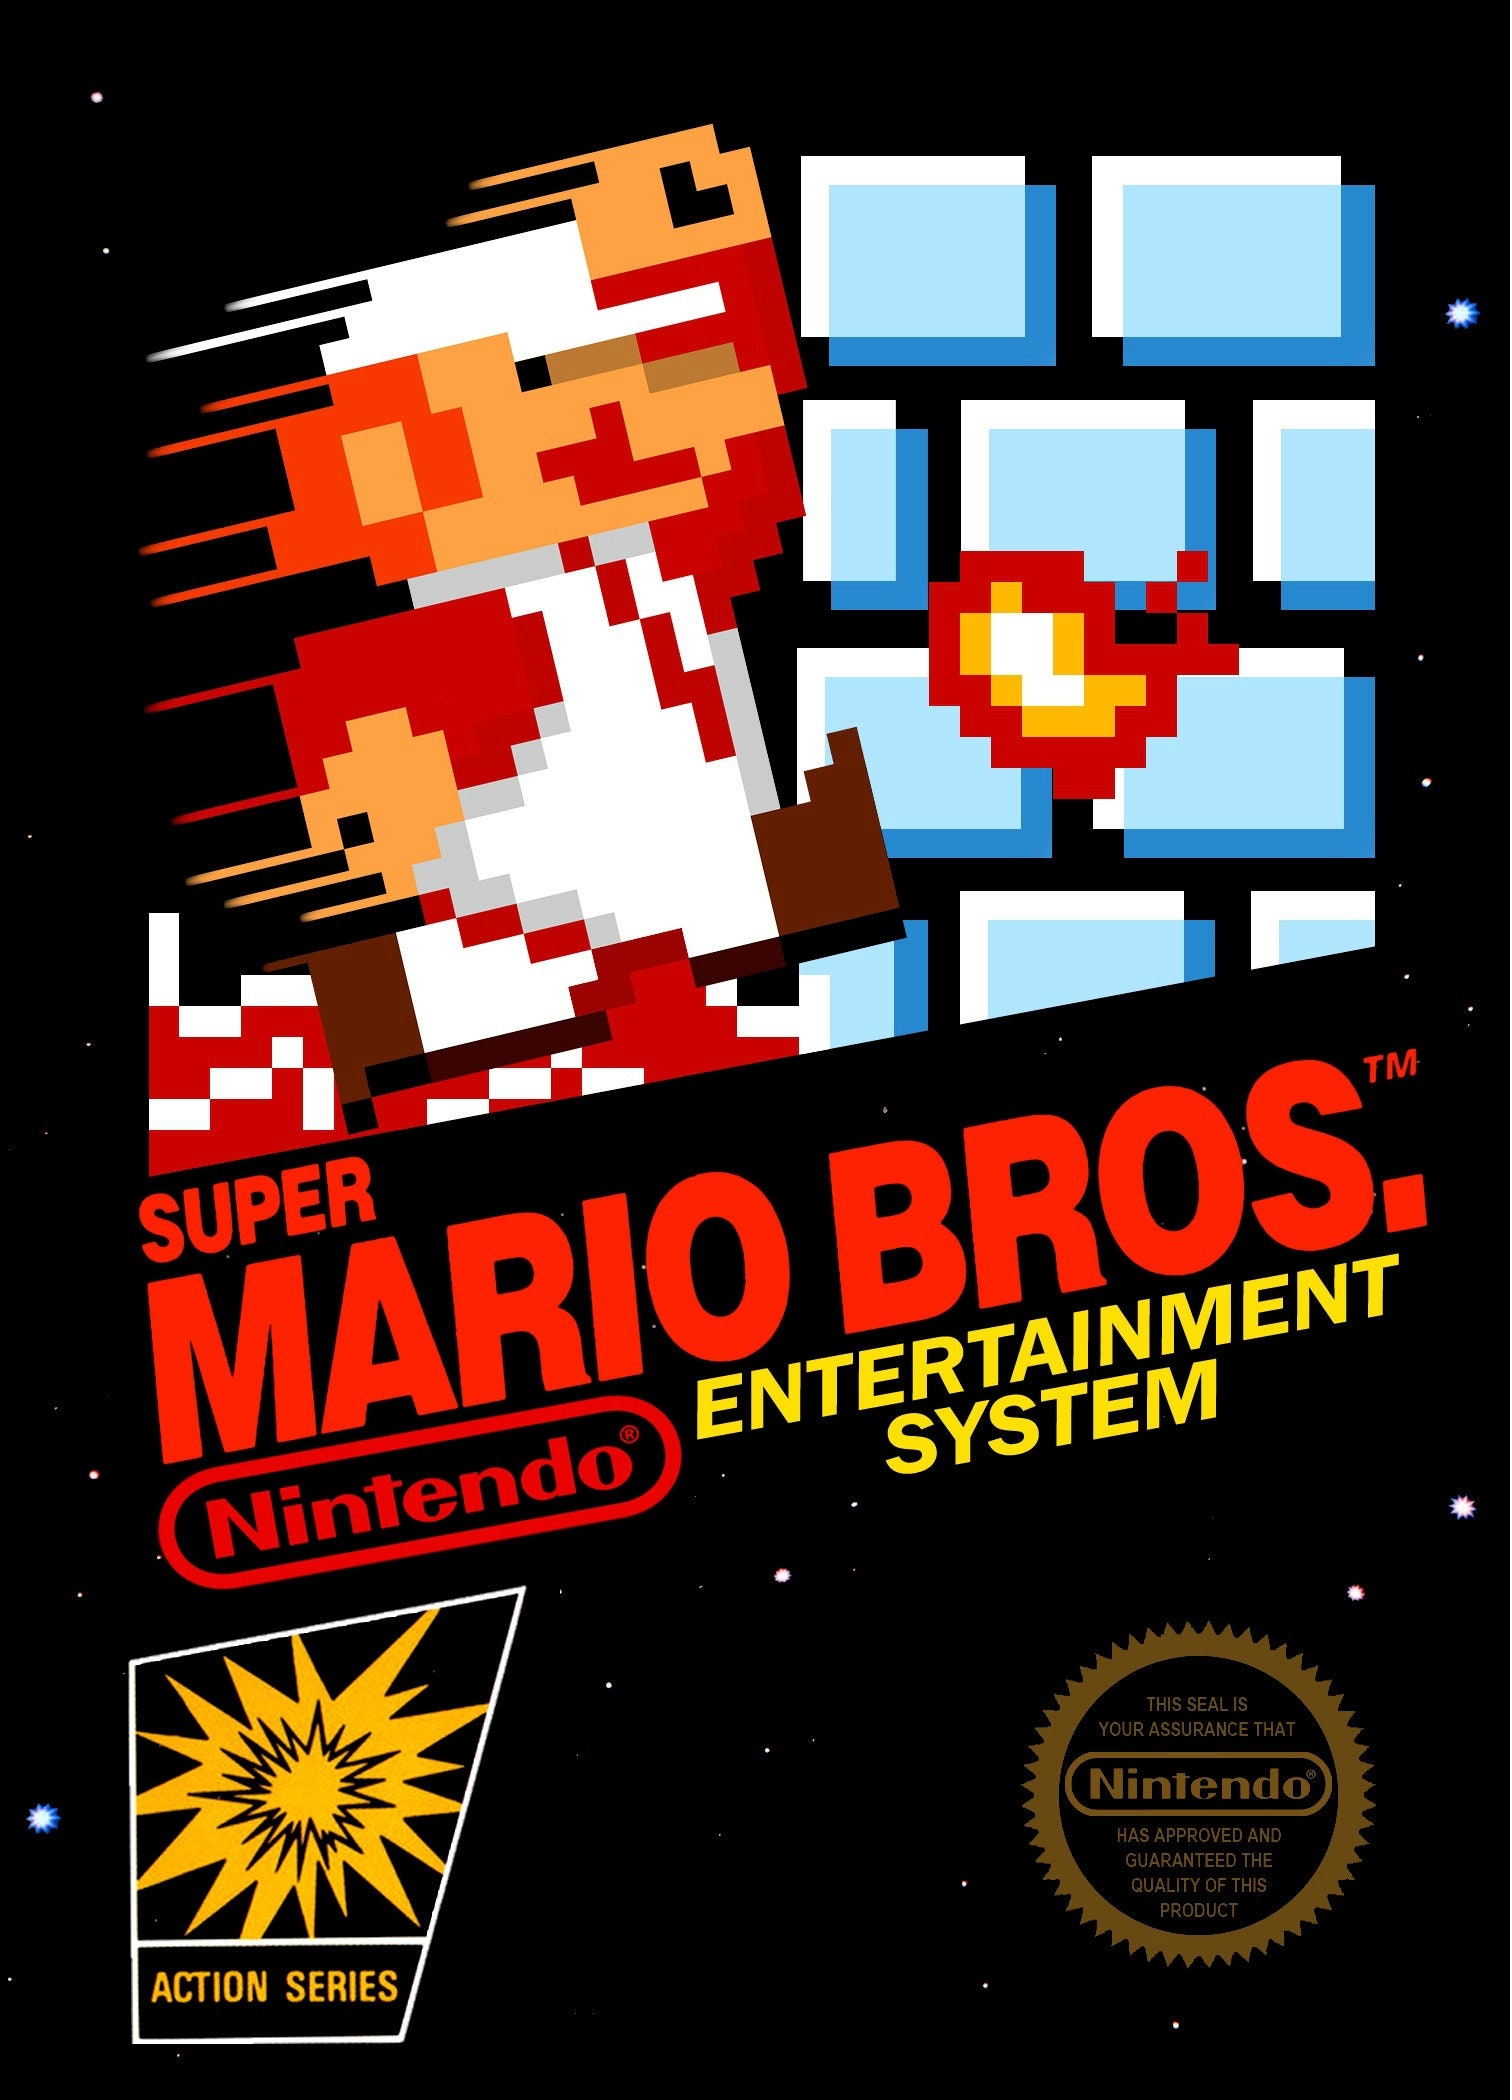 Super Mario Bros 2 1 Retro 3 NES Etsy A4 Gaming Nintendo A3 Size - Poster 